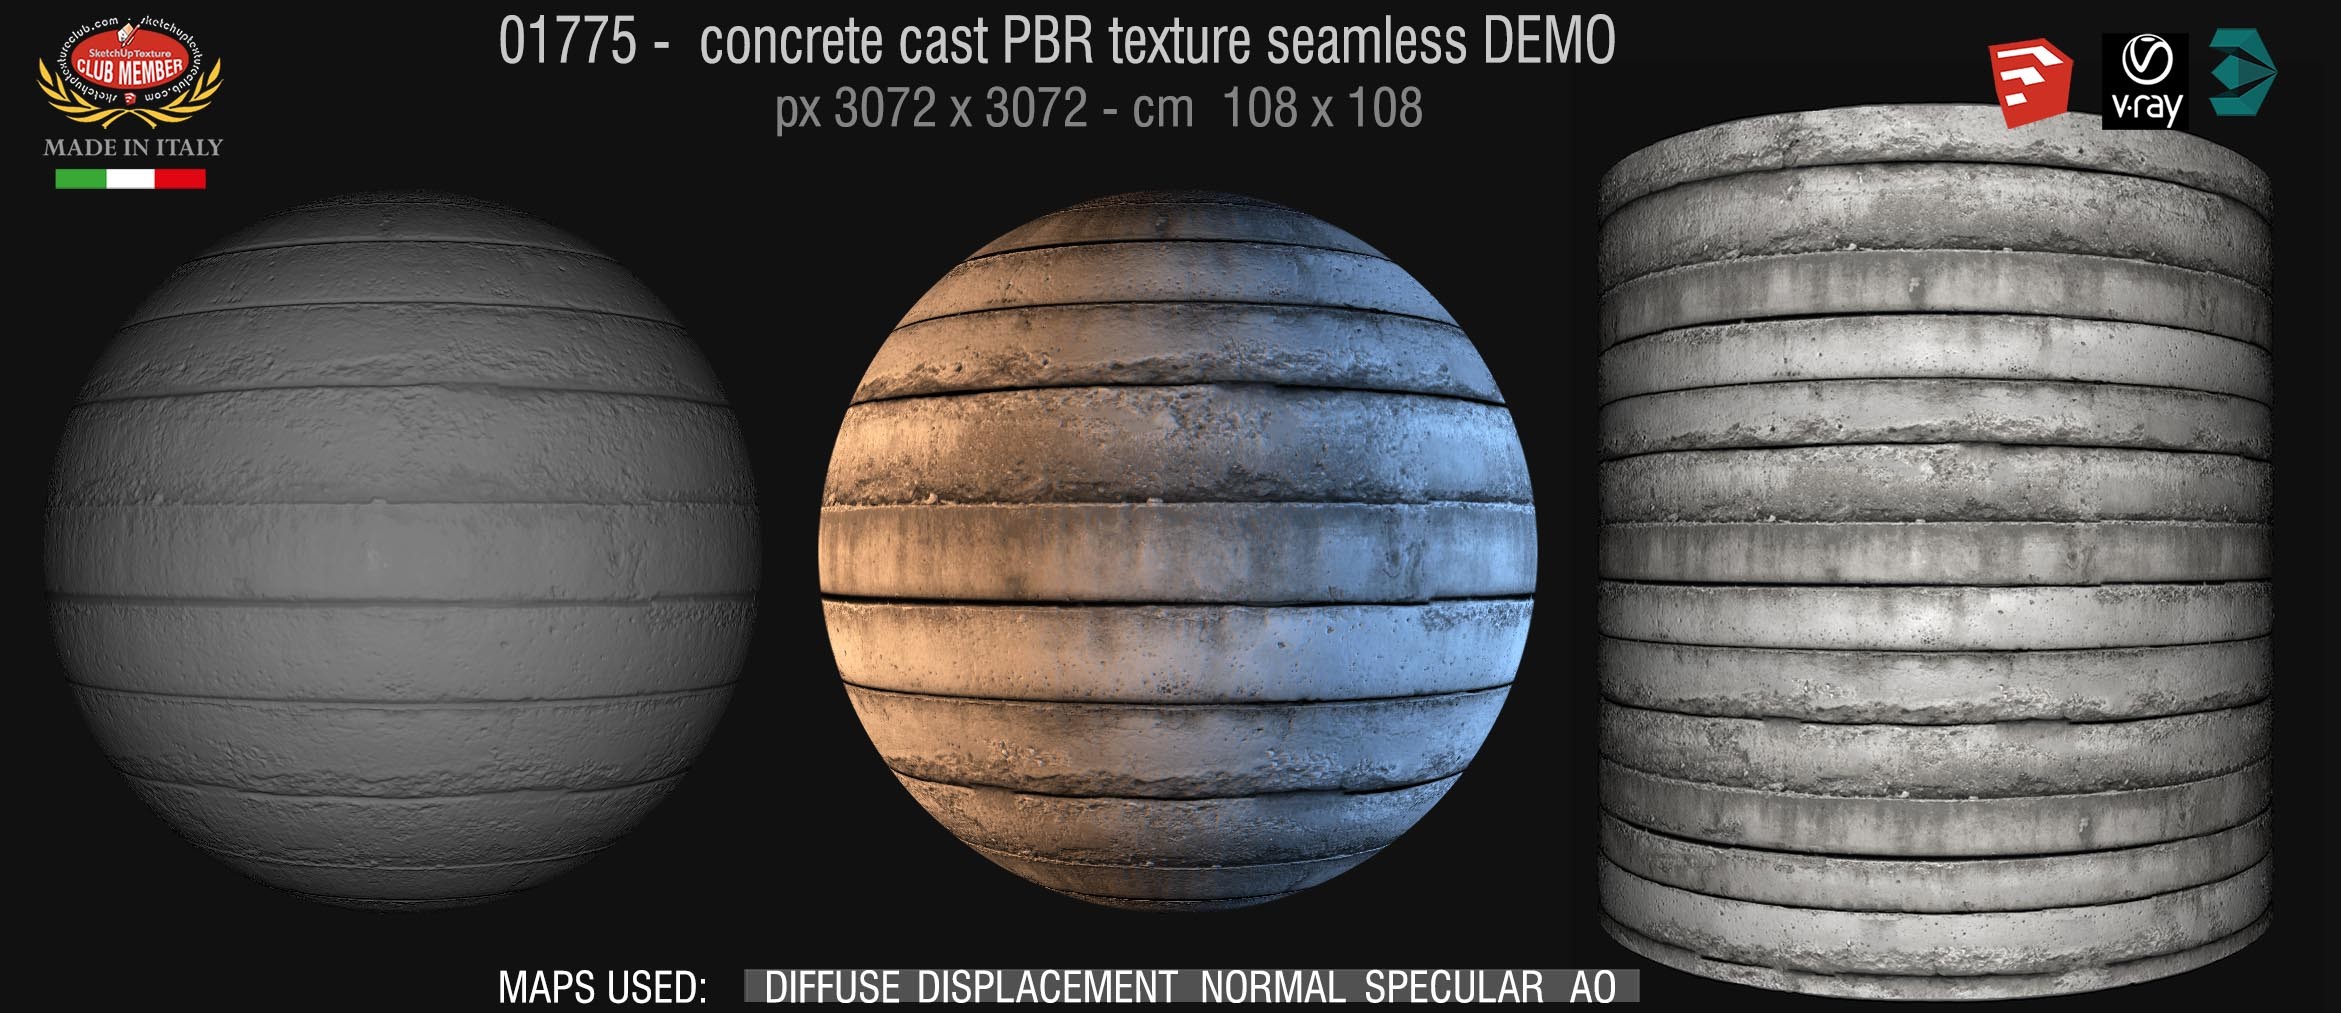 01775 concrete cast PBR texture seamless DEMO